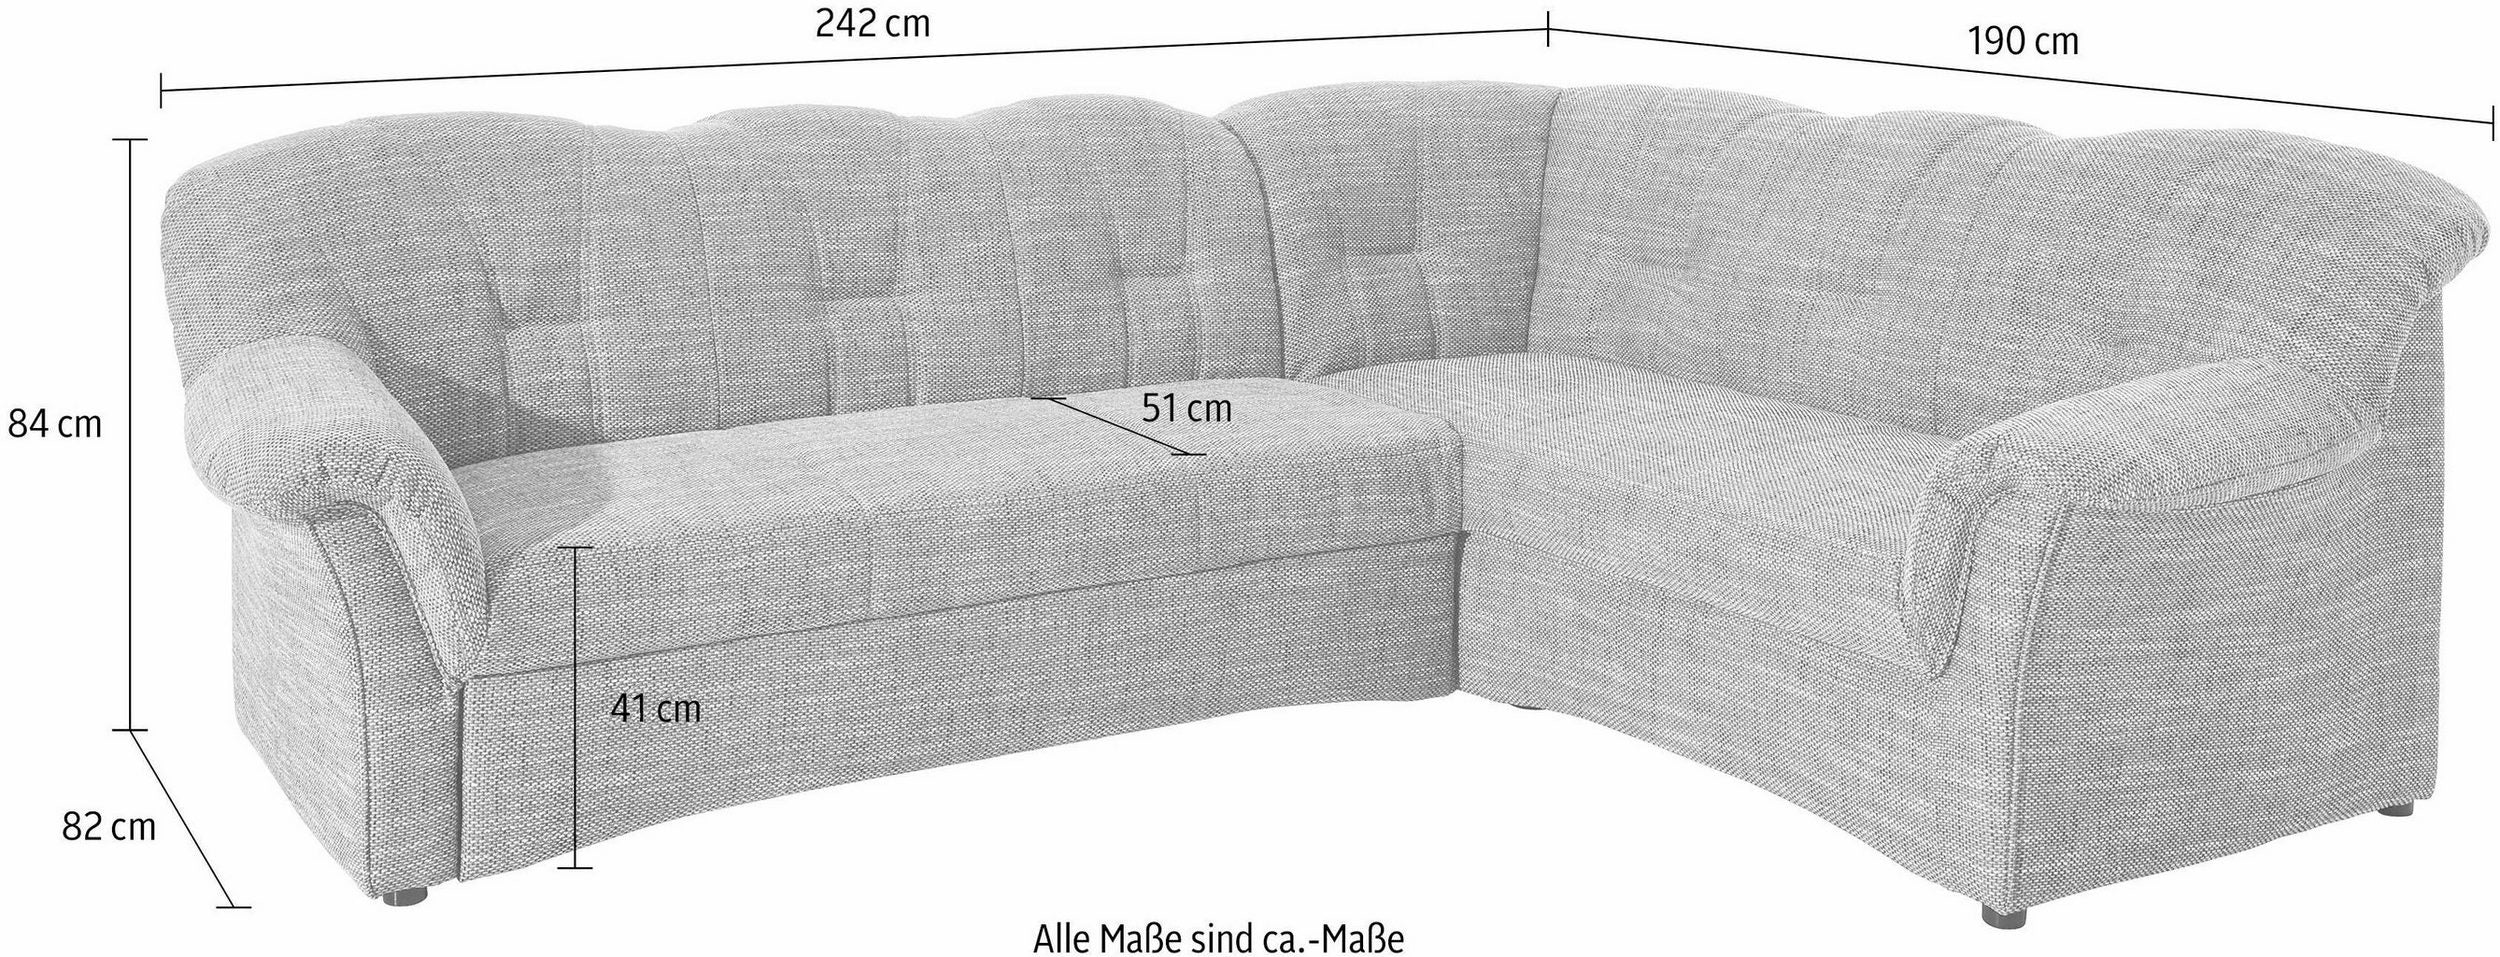 Medidas de sofá en L